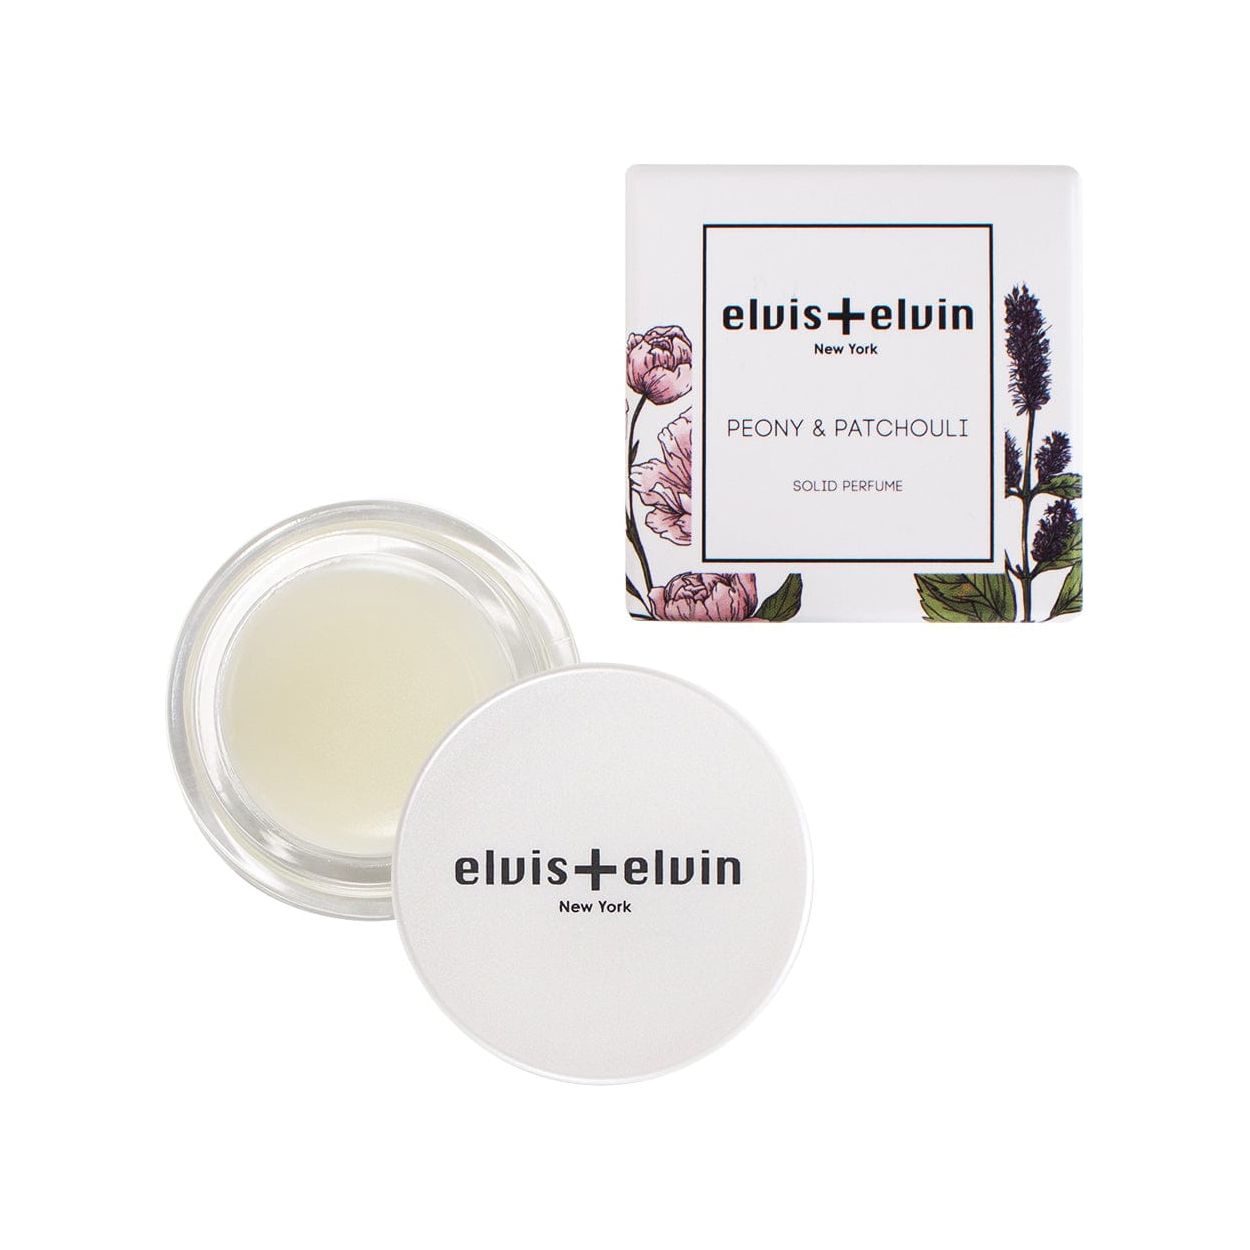 elvis+elvin Solid Perfume - Peony & Patchouli by elvis+elvin